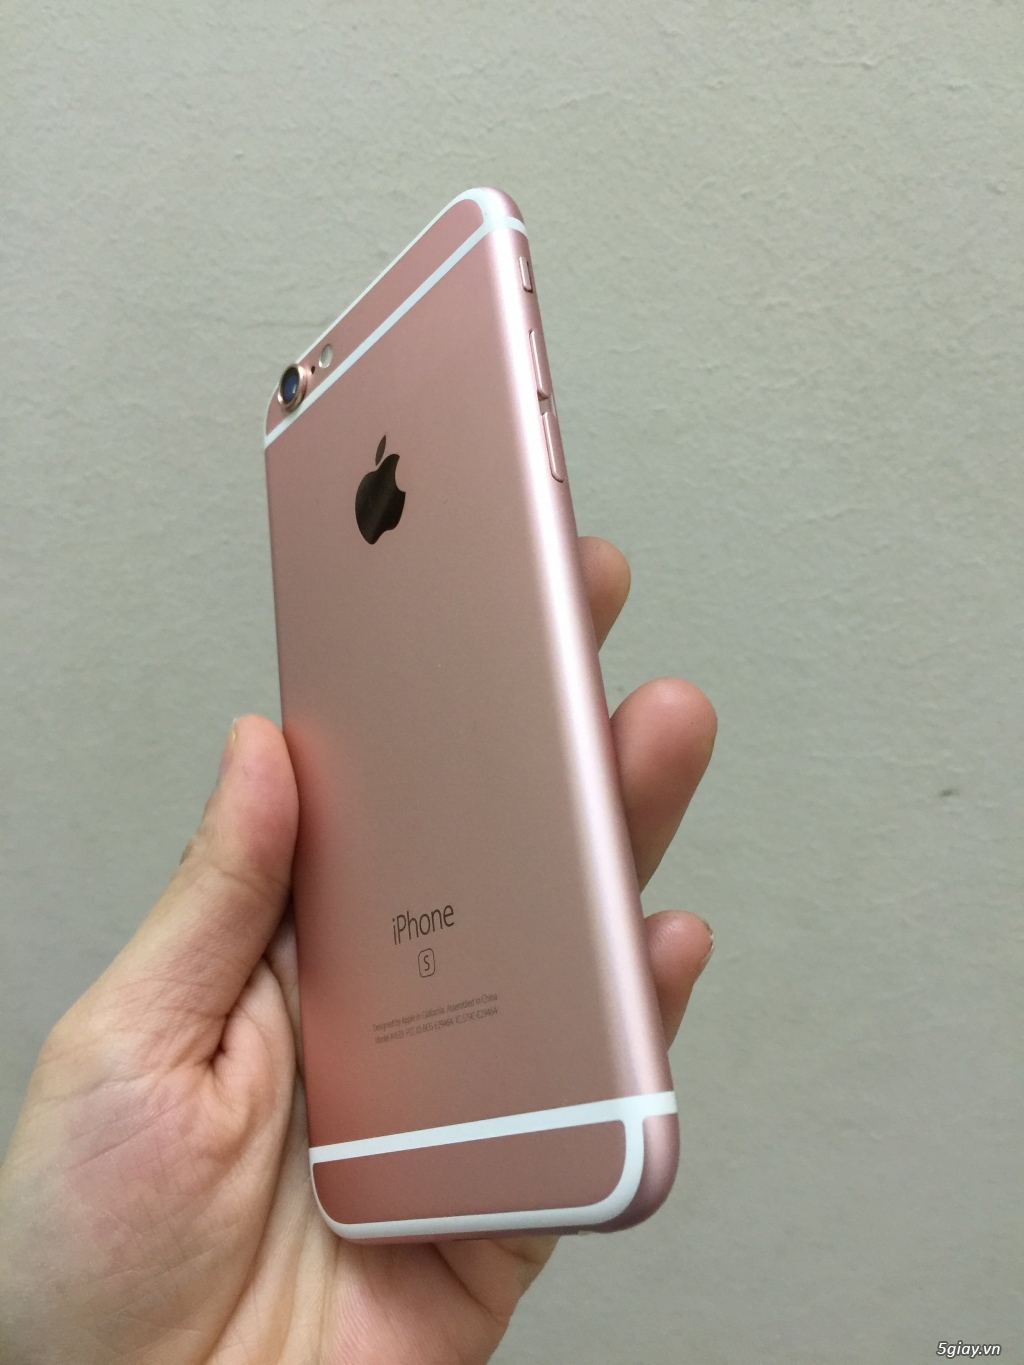 iPhone 6s Plus 16GB Rose Gold bản lock Tmobile Mỹ IOS 9 zin all - 2